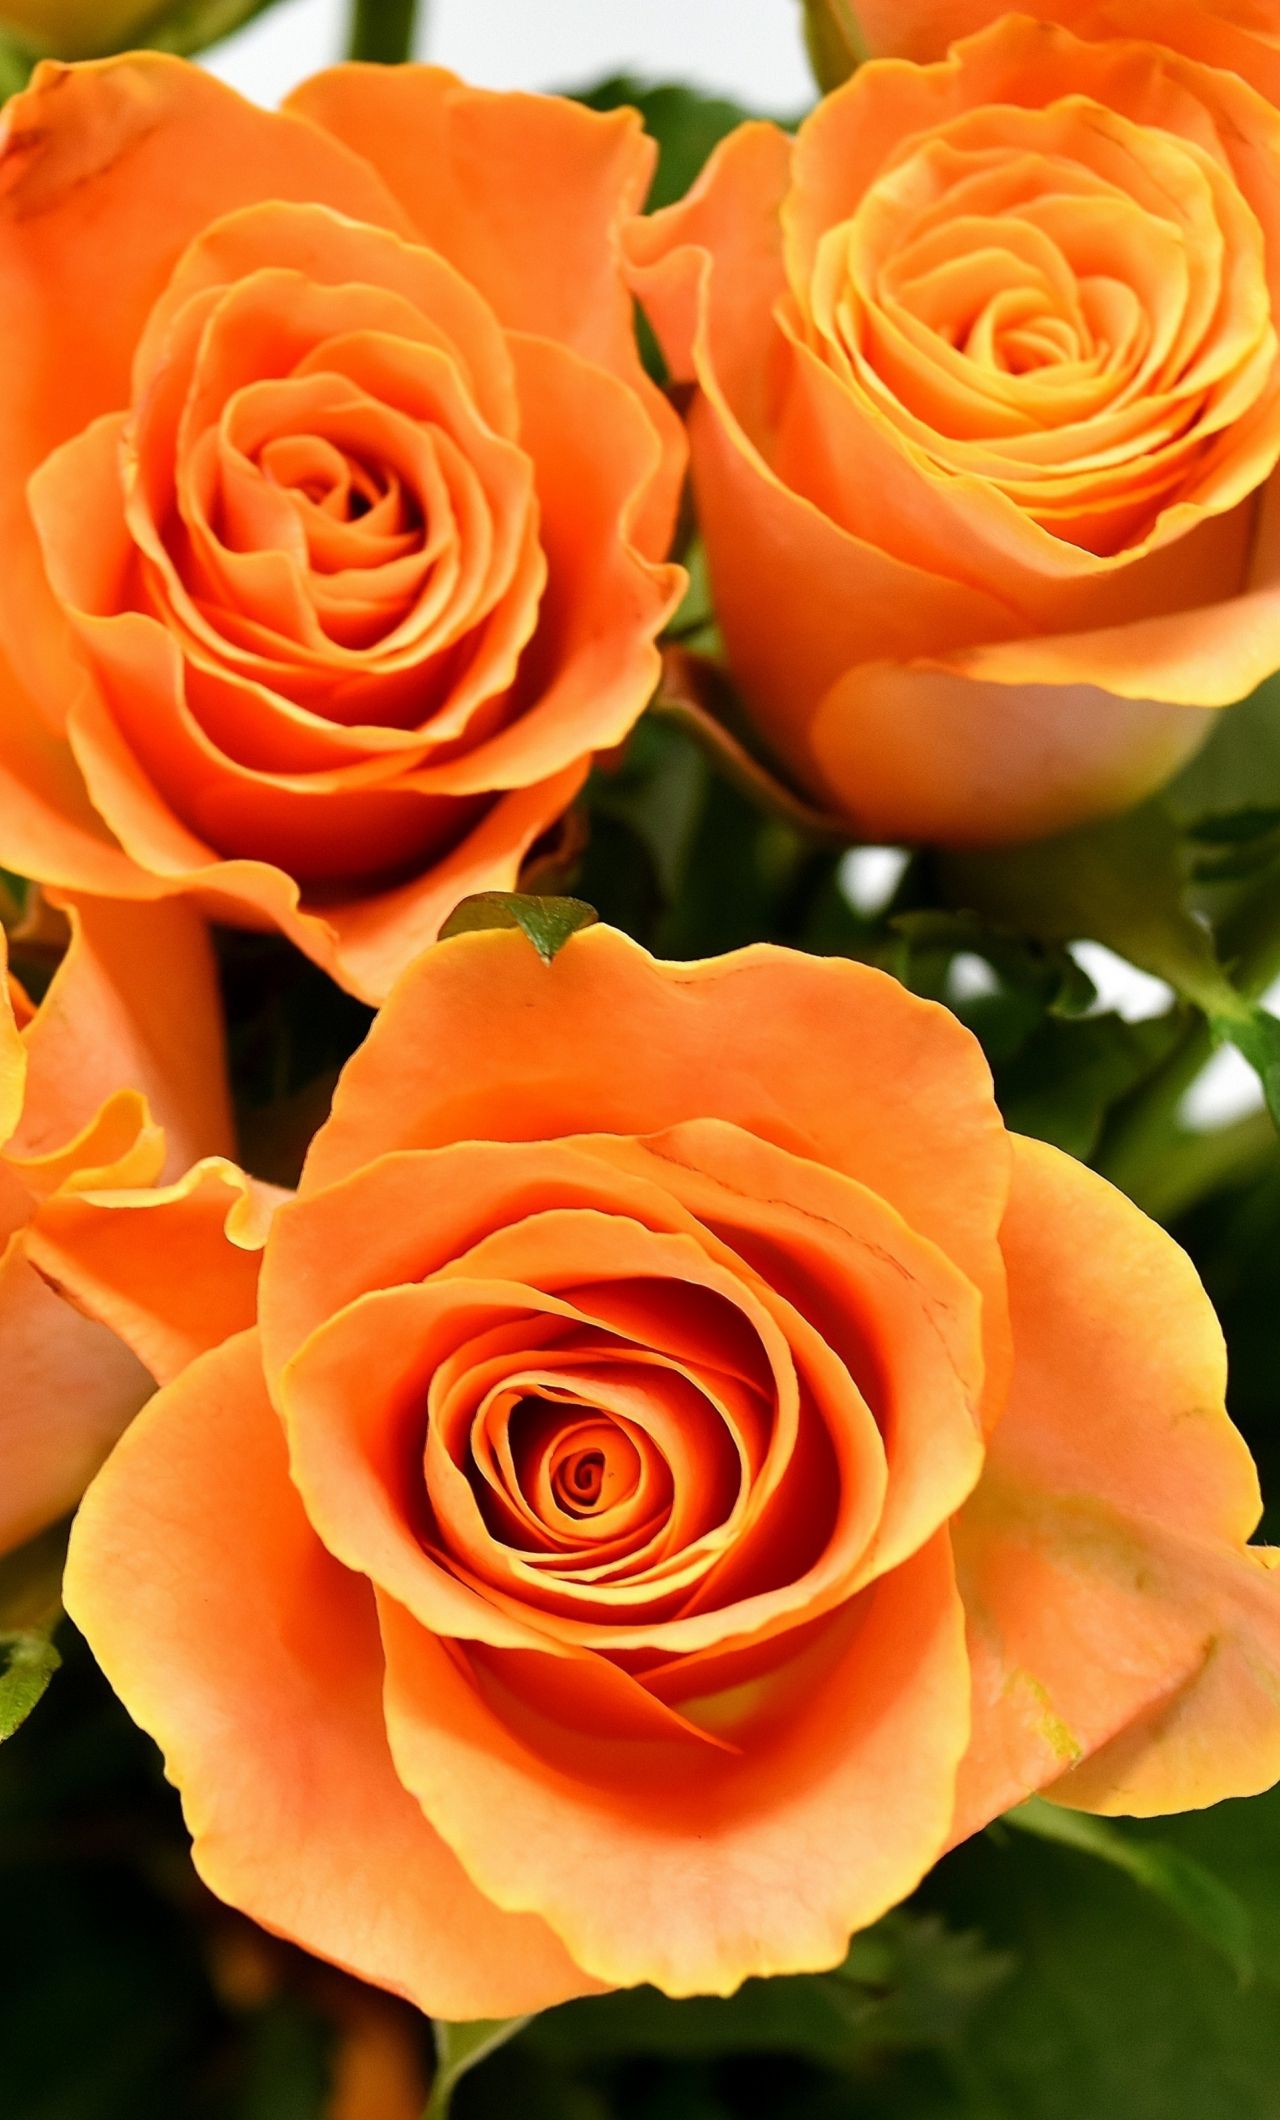 1280x2120 Download 1280x2120 Wallpaper Orange Roses Flowers Bouquet Iphone 6 Plus 1280x2120 Hd Image Background 3028